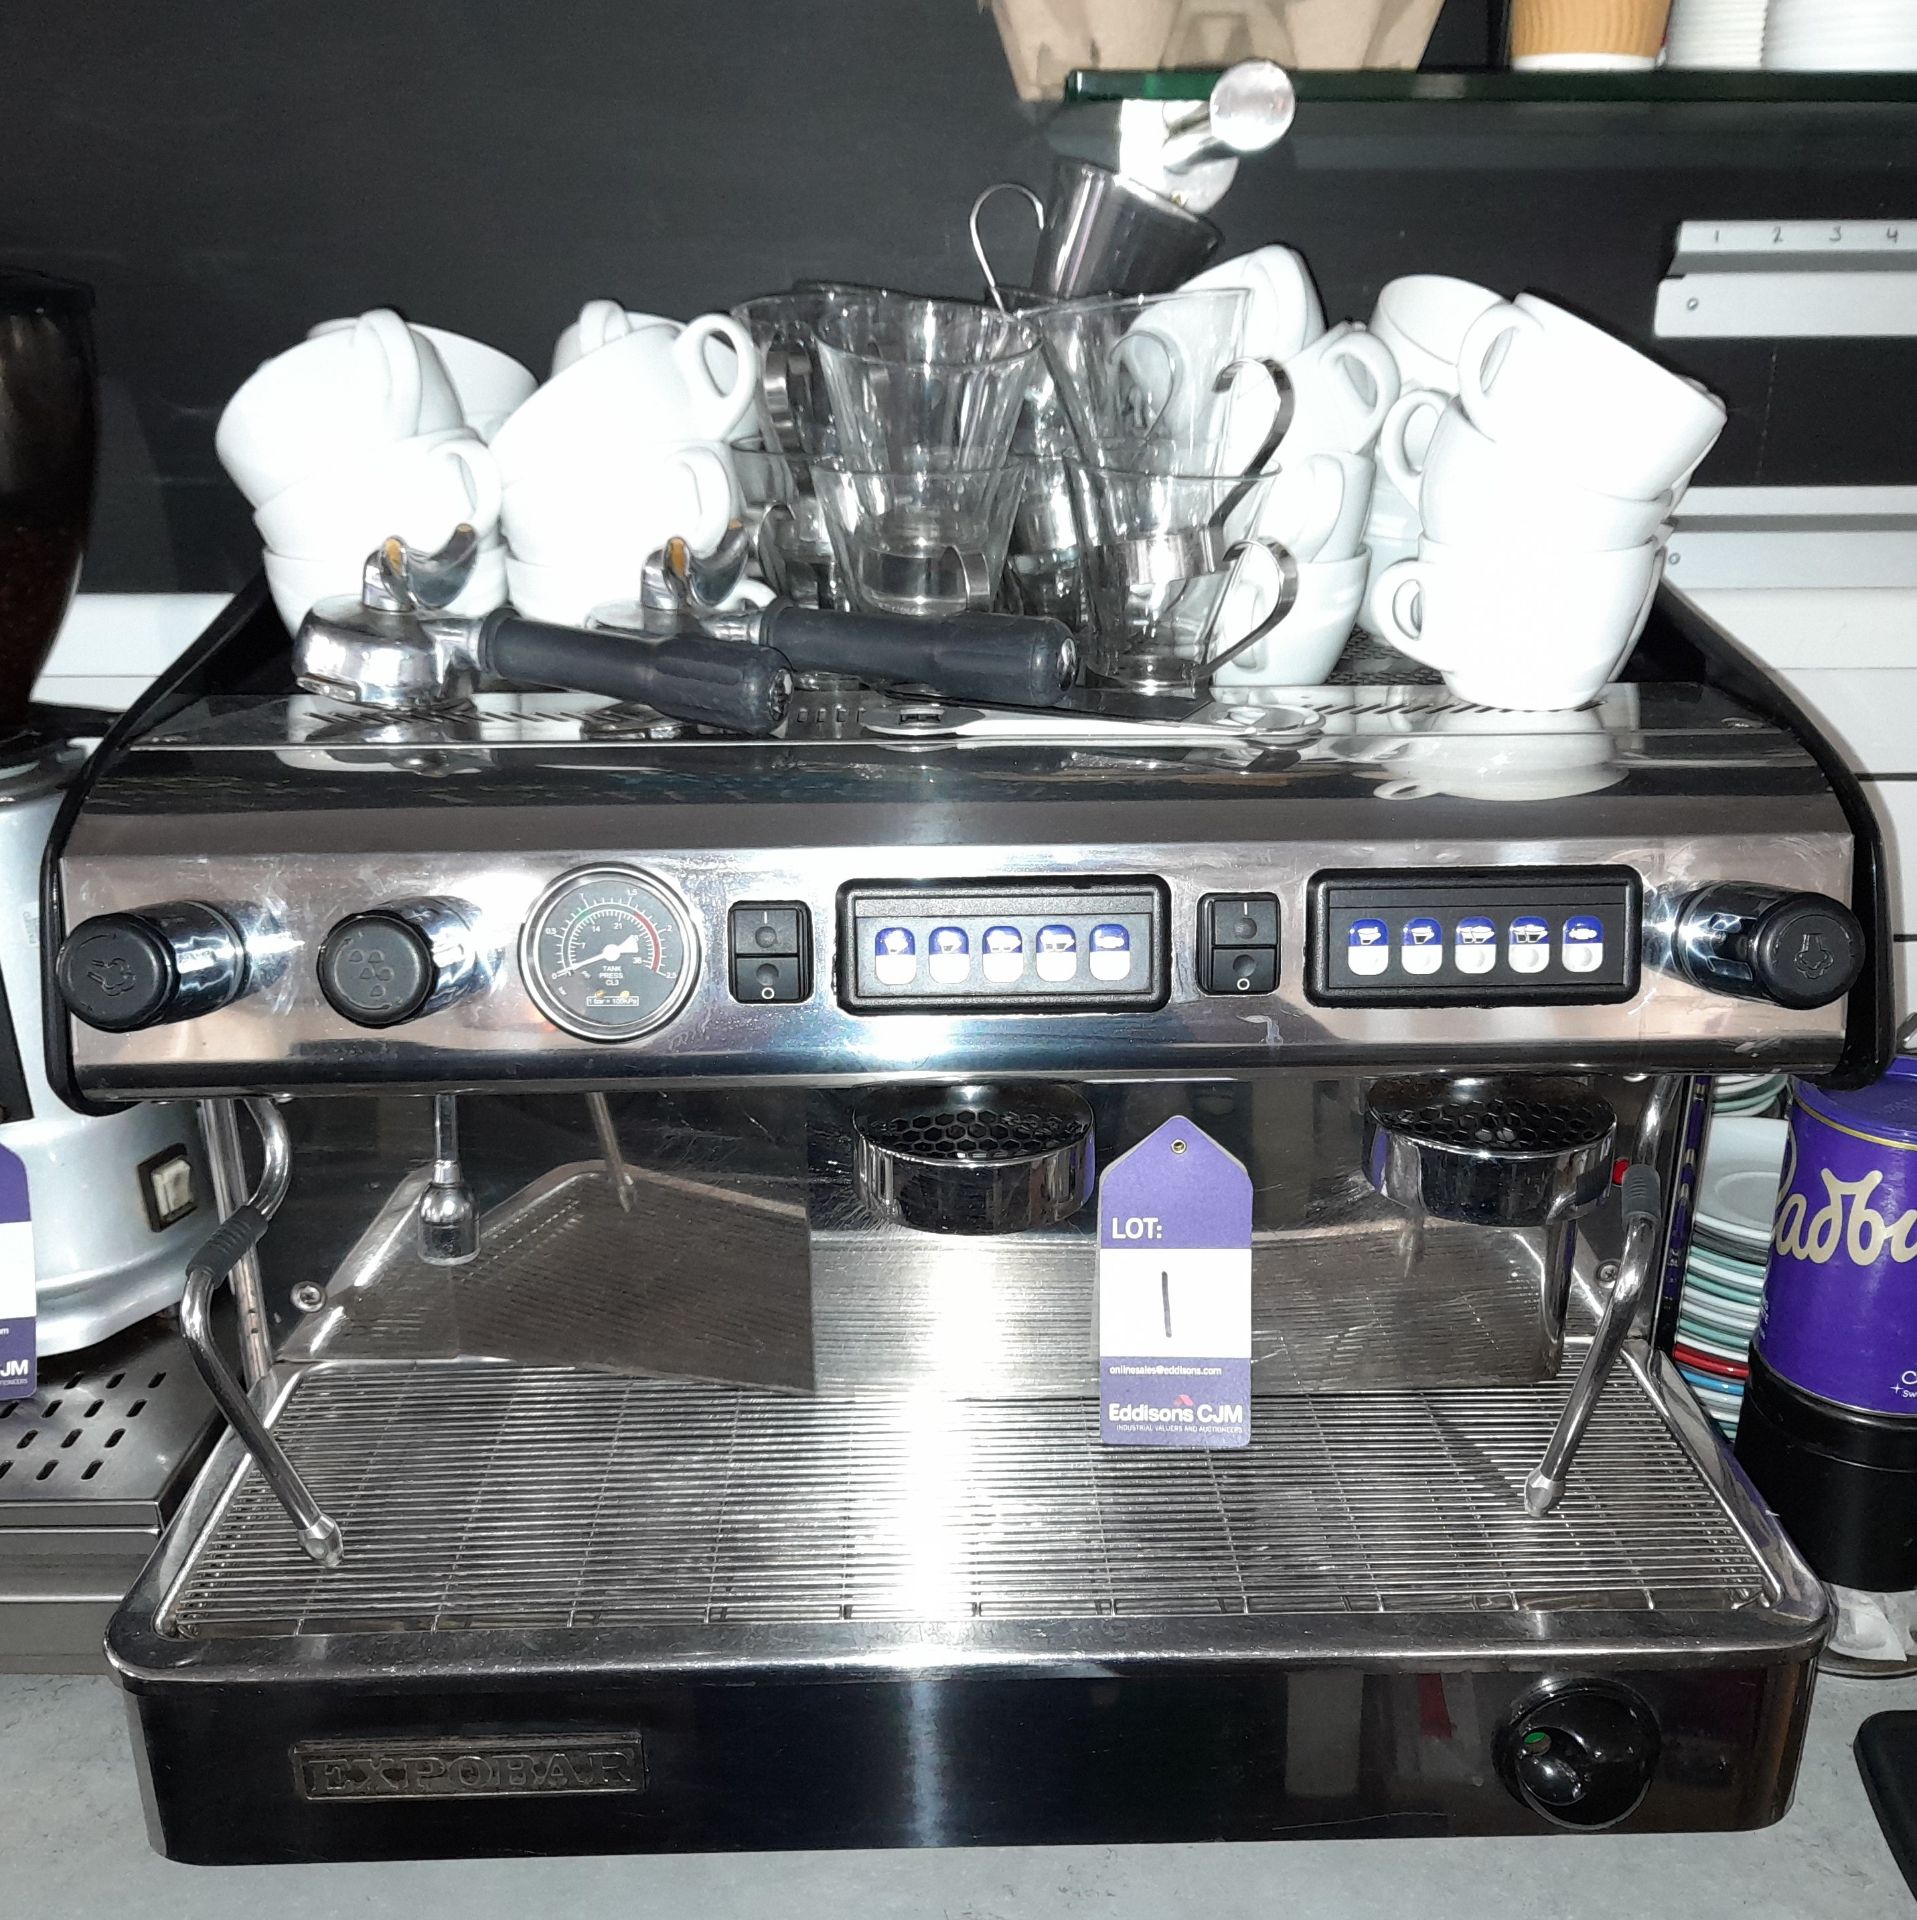 Expobar MegaCrem espresso coffee machine